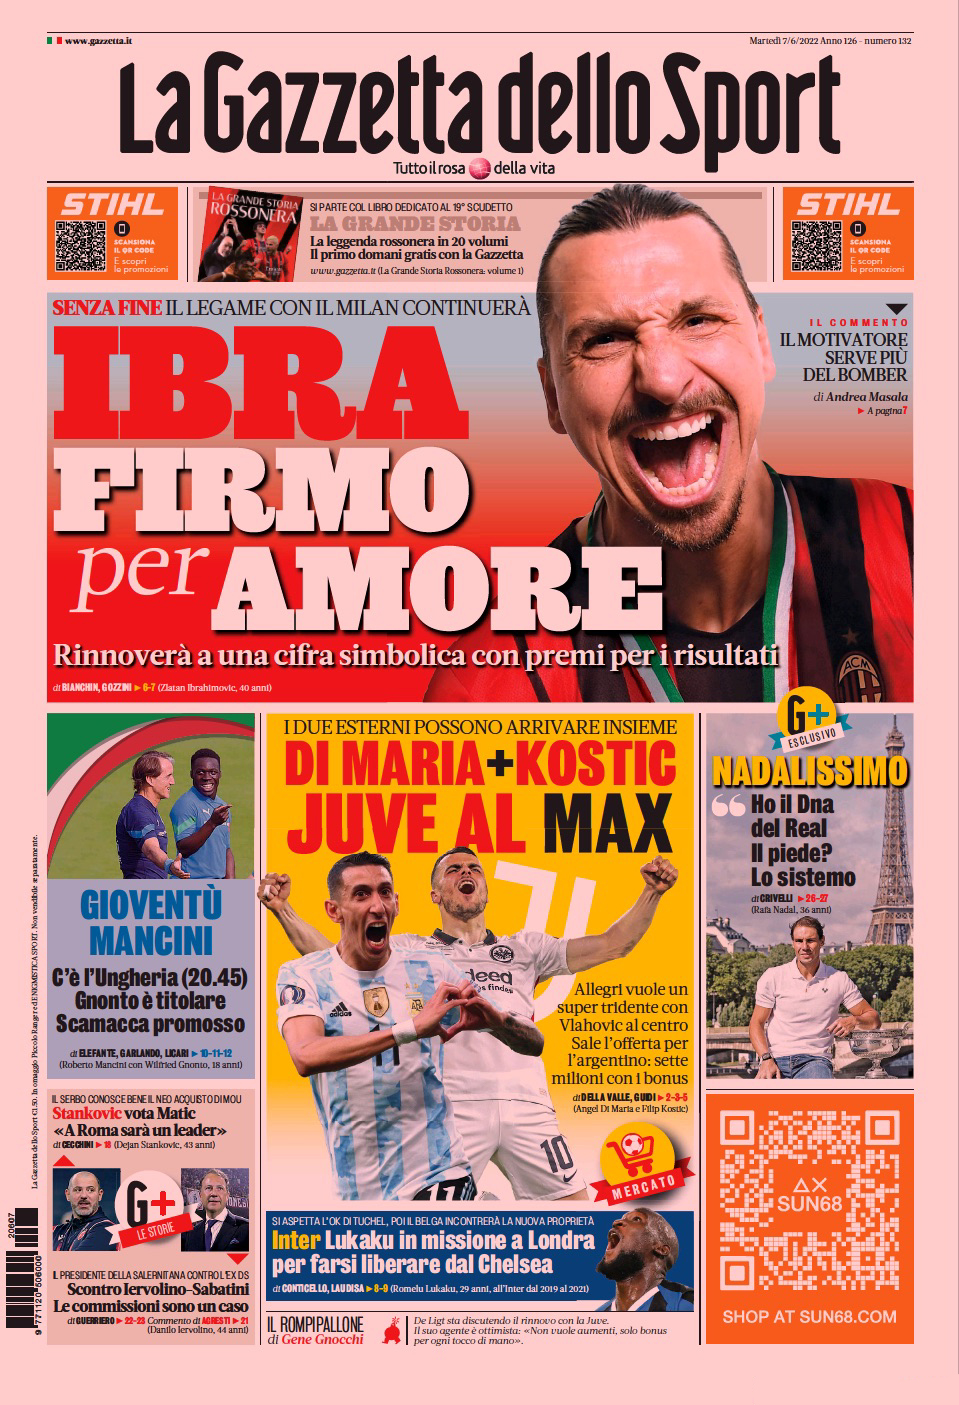 Макс хочет так. Заголовки Gazzetta, TuttoSport и Corriere за 7 июня